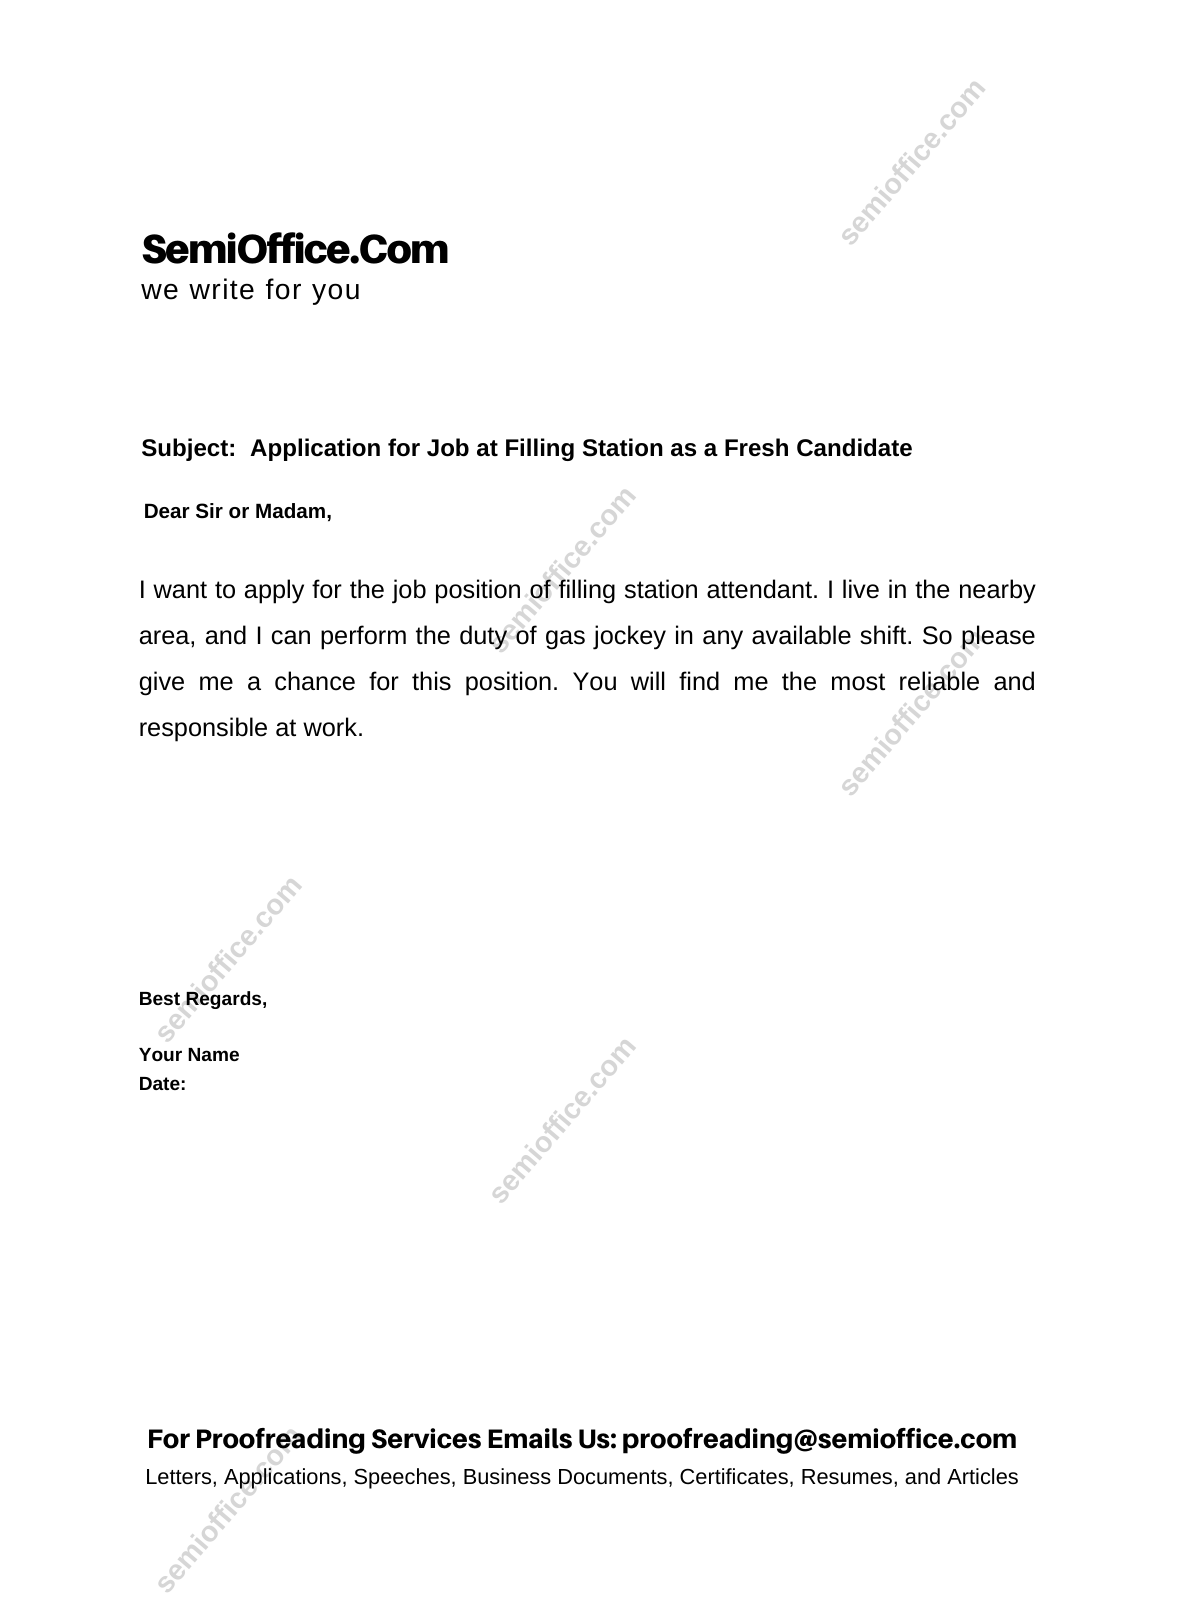 application letter for filling station job